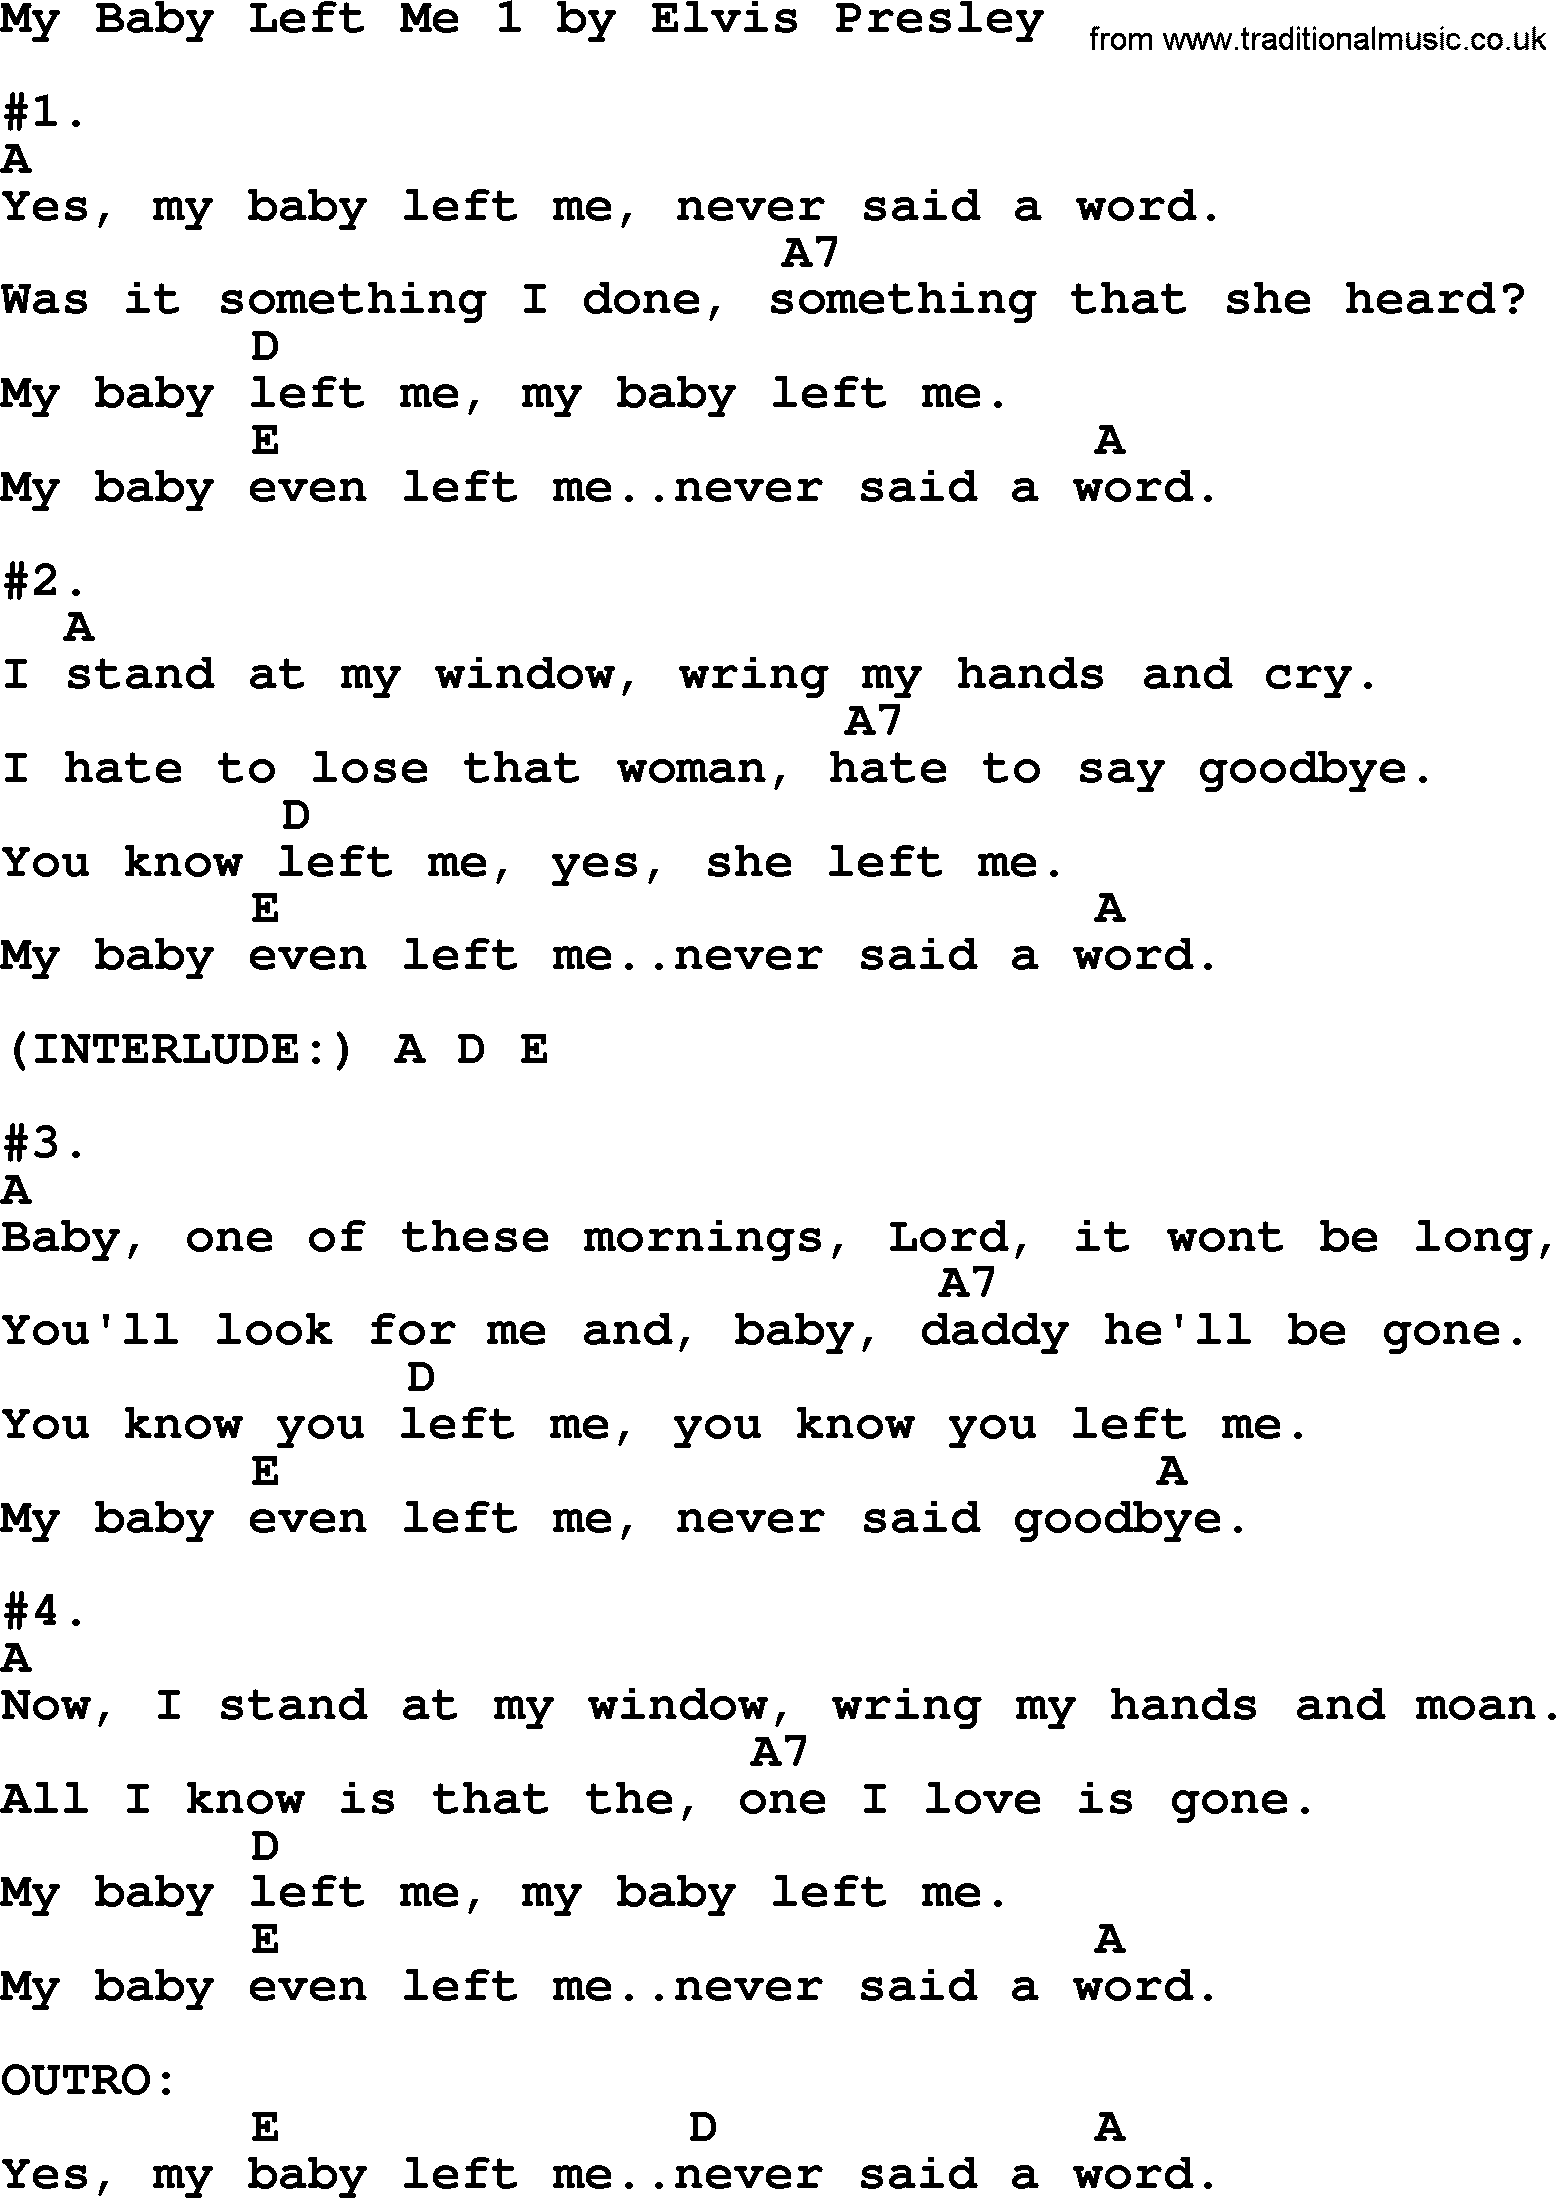 My Baby Left Me 1, by Elvis Presley - lyrics and chords